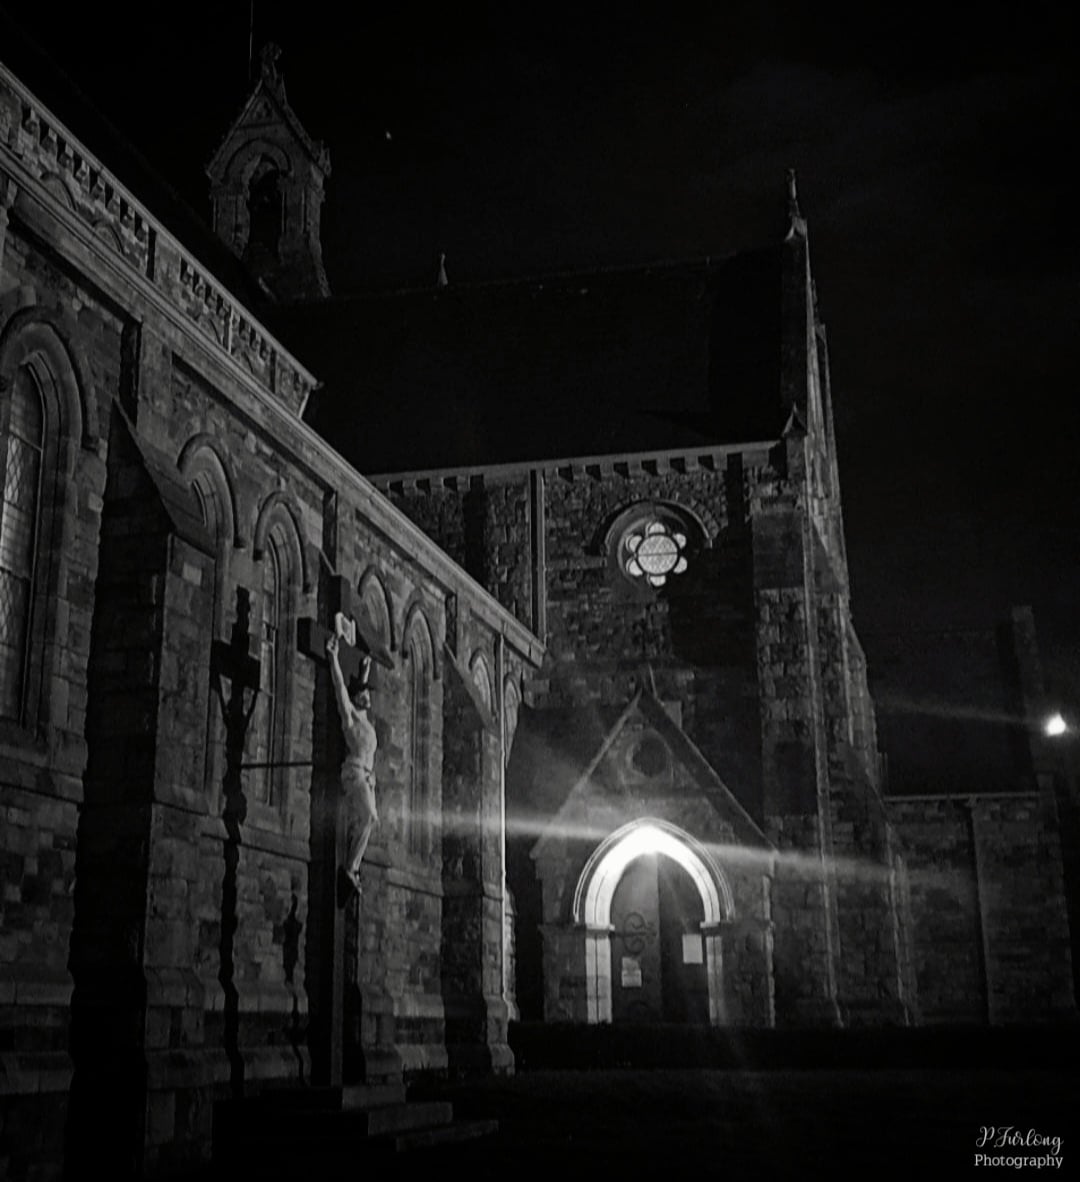 When night becomes black n white 

#photography #mono #Church #nite #bnwphotography #localchurch #Nightphotography #monochrome